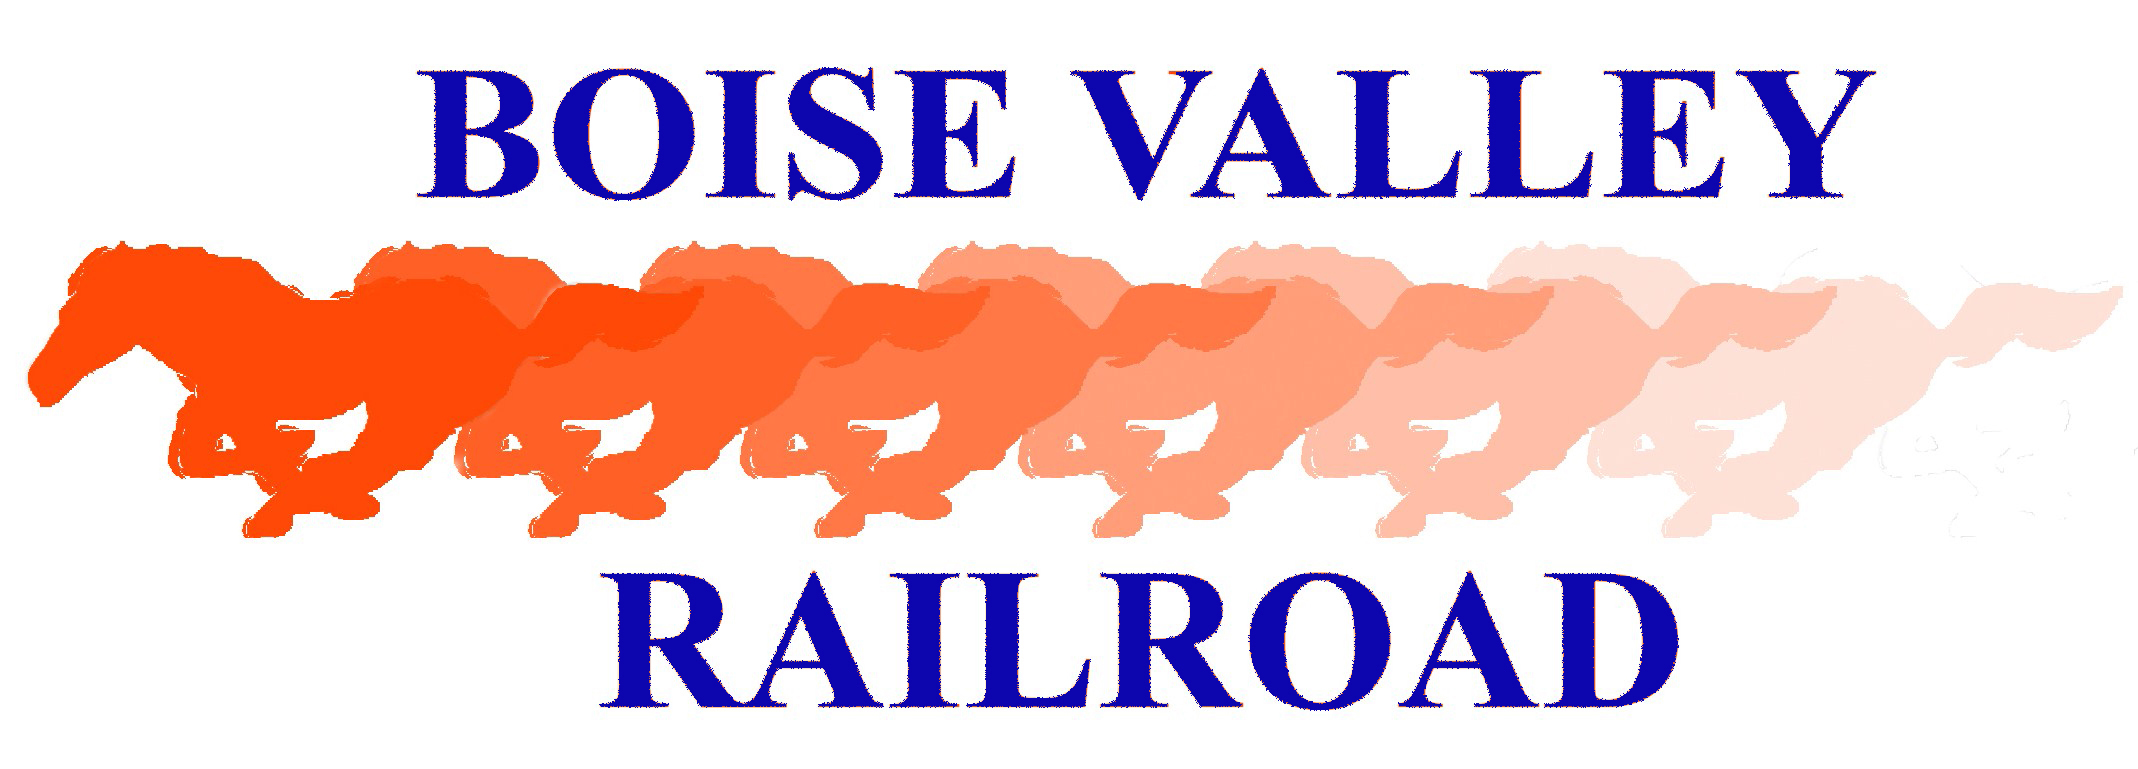 Boise Valley Railroad